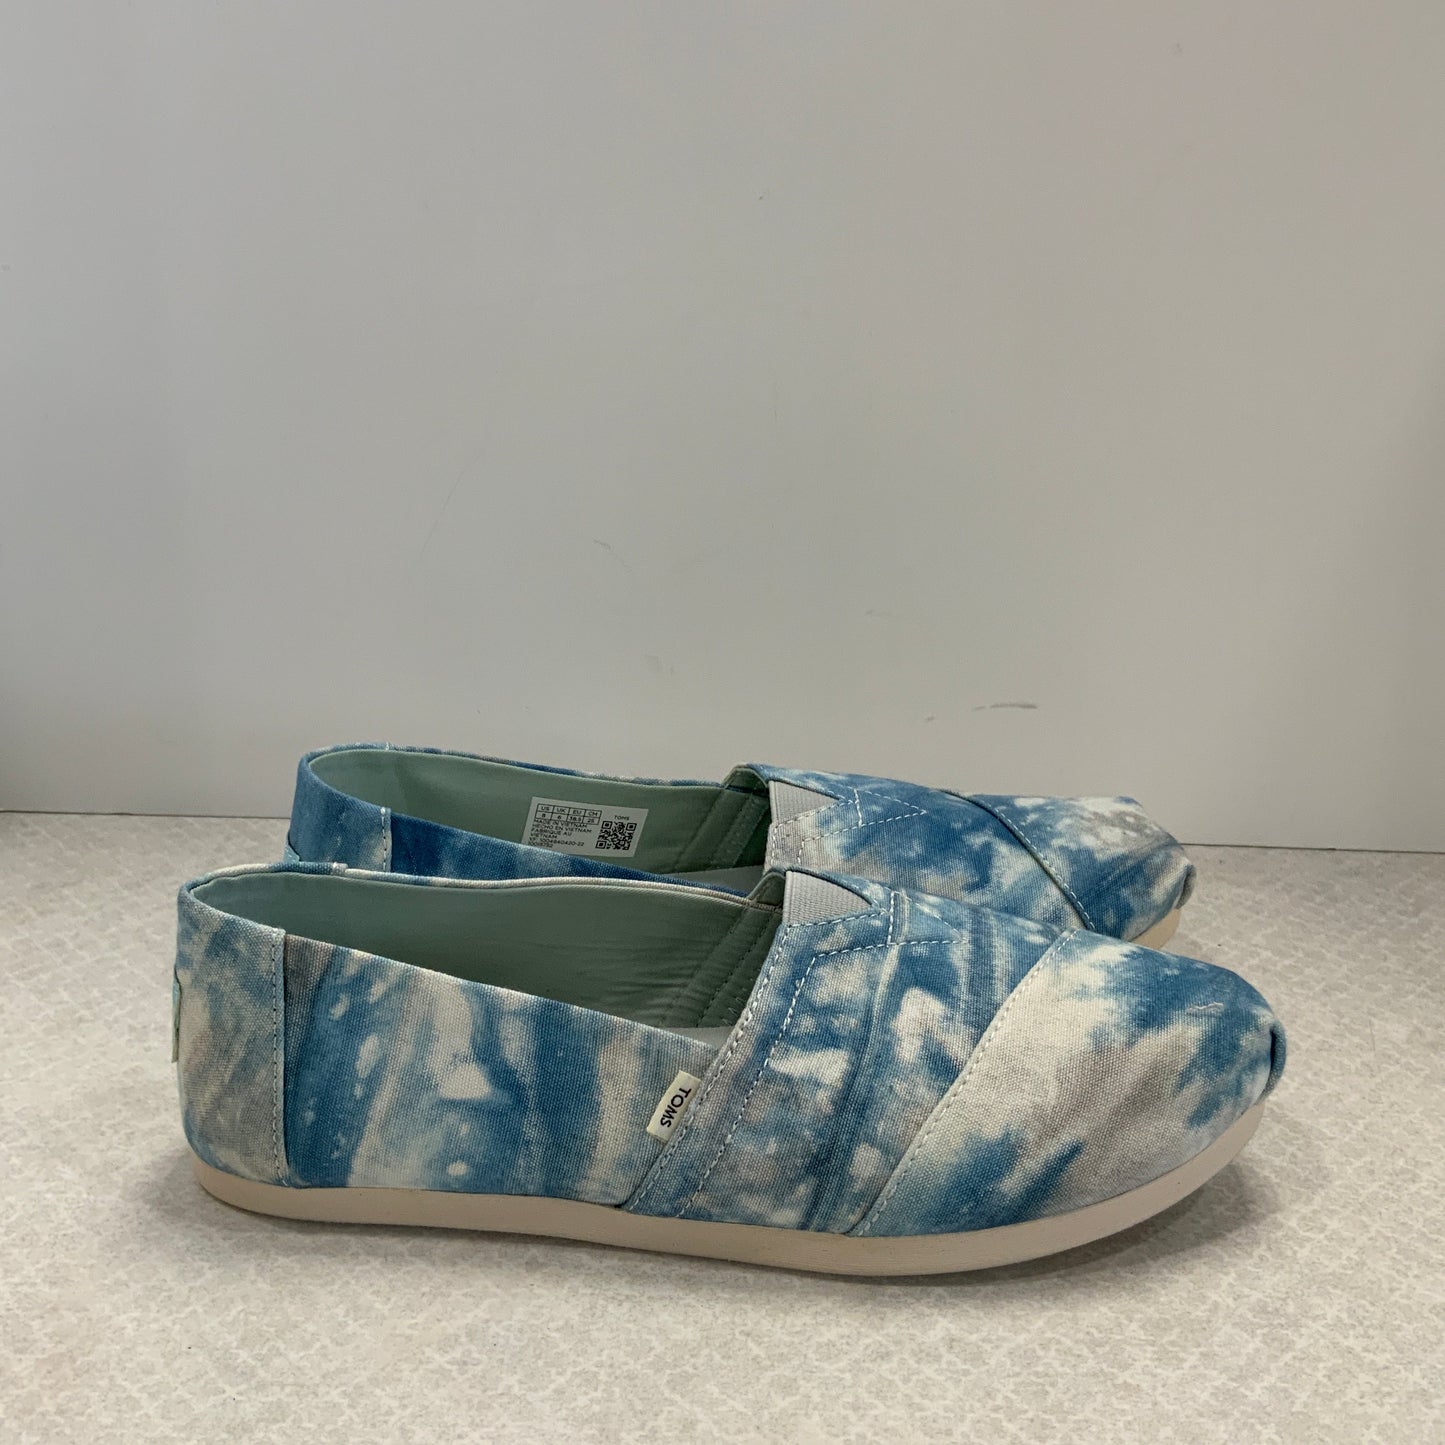 Blue & White Shoes Flats Toms, Size 8